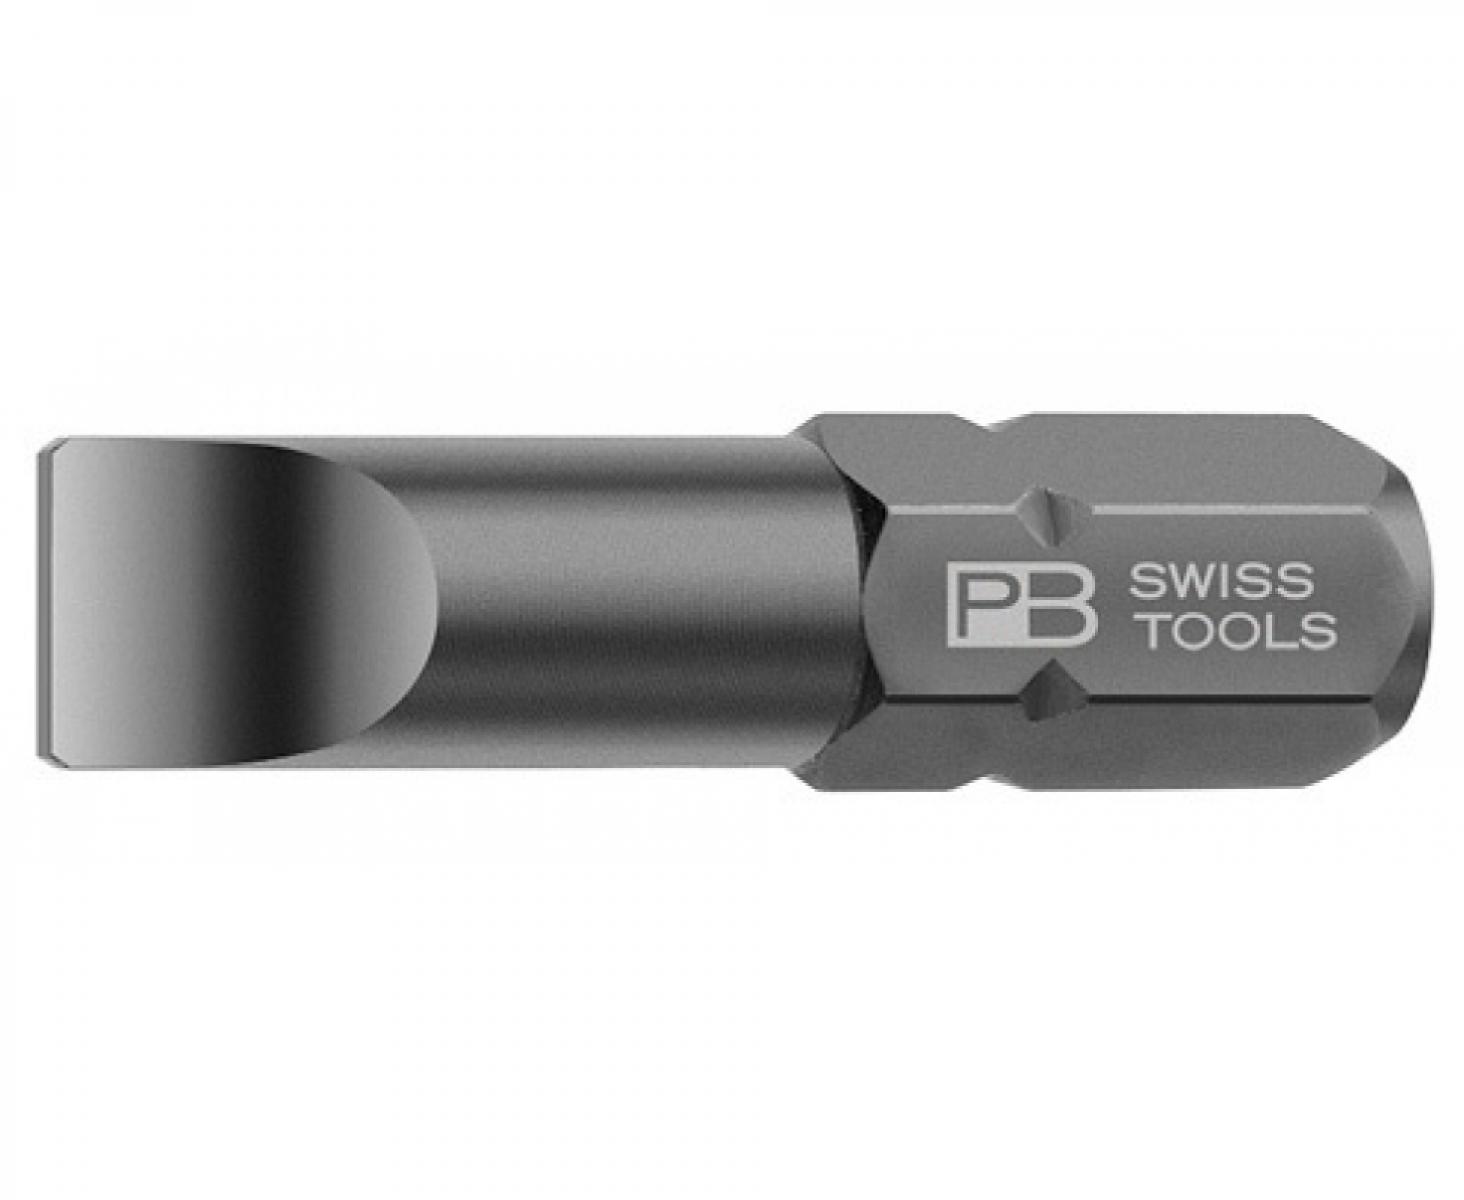 Бита шлицевая PrecisionBits C6,3 с внешним шестигранником 1/4 PB Swiss Tools PB C6.135/6 1.6 x 10